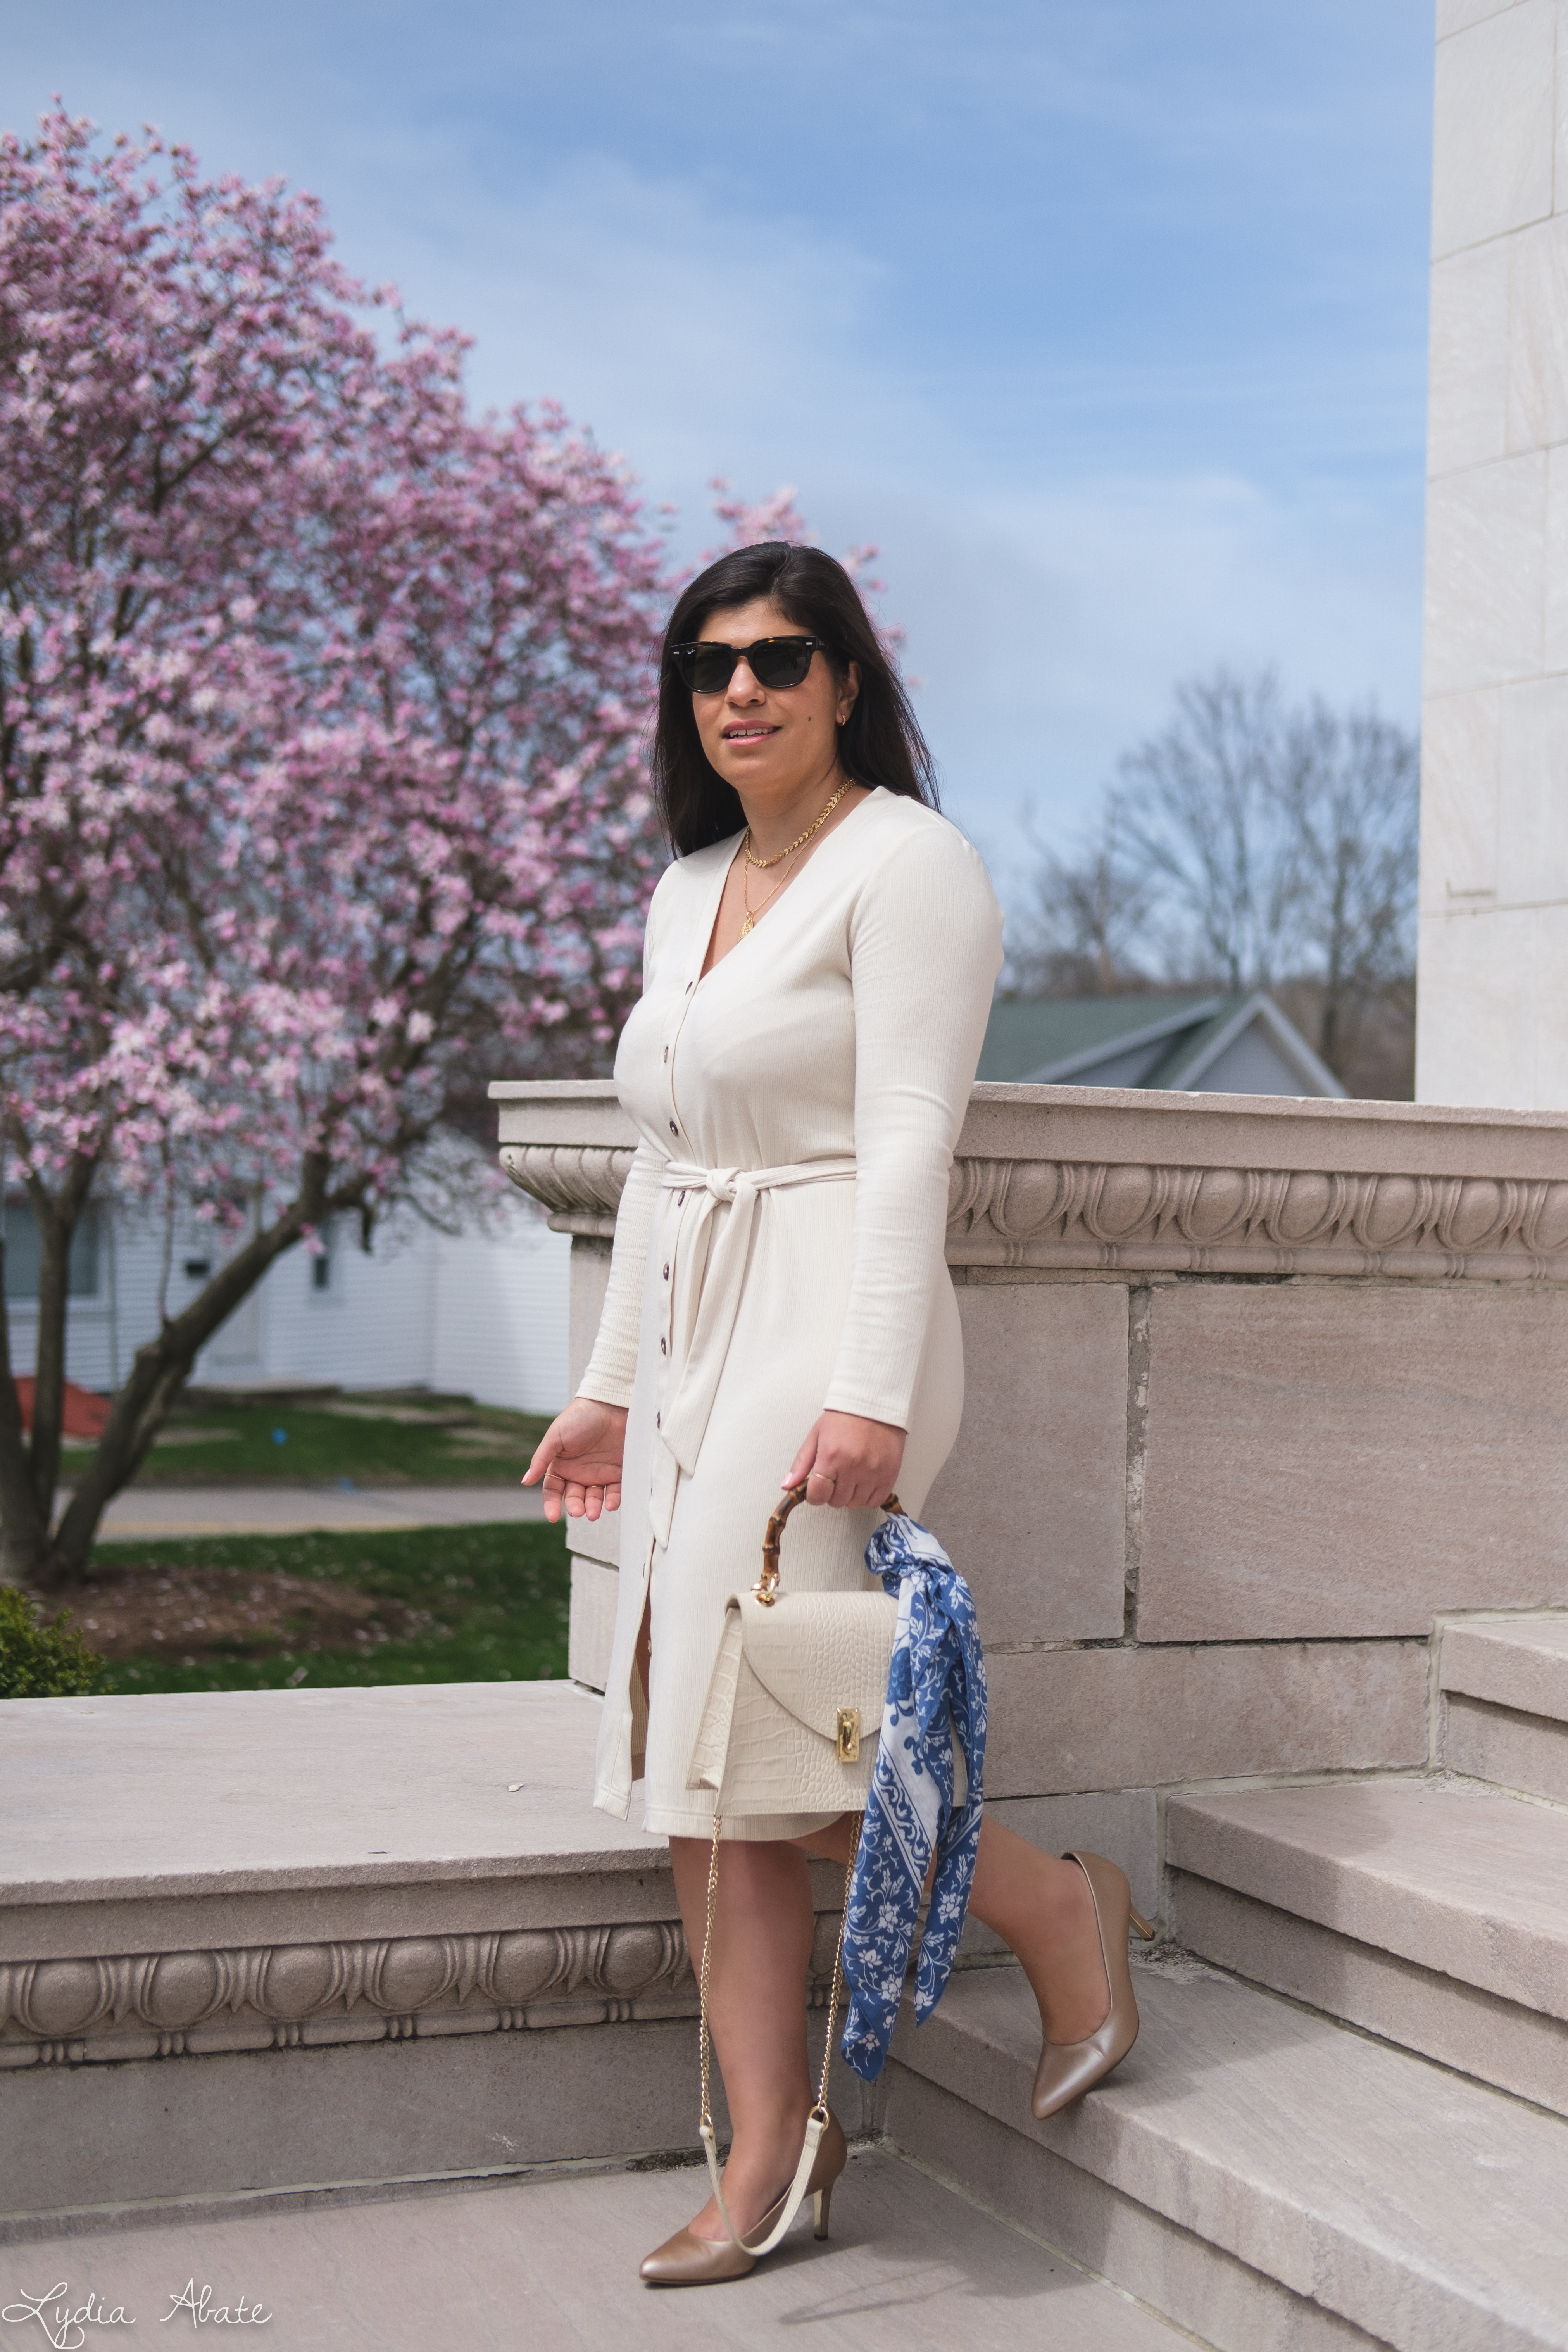 cream knit dress, croc handbag, cherry blossom pendant necklace-4.jpg